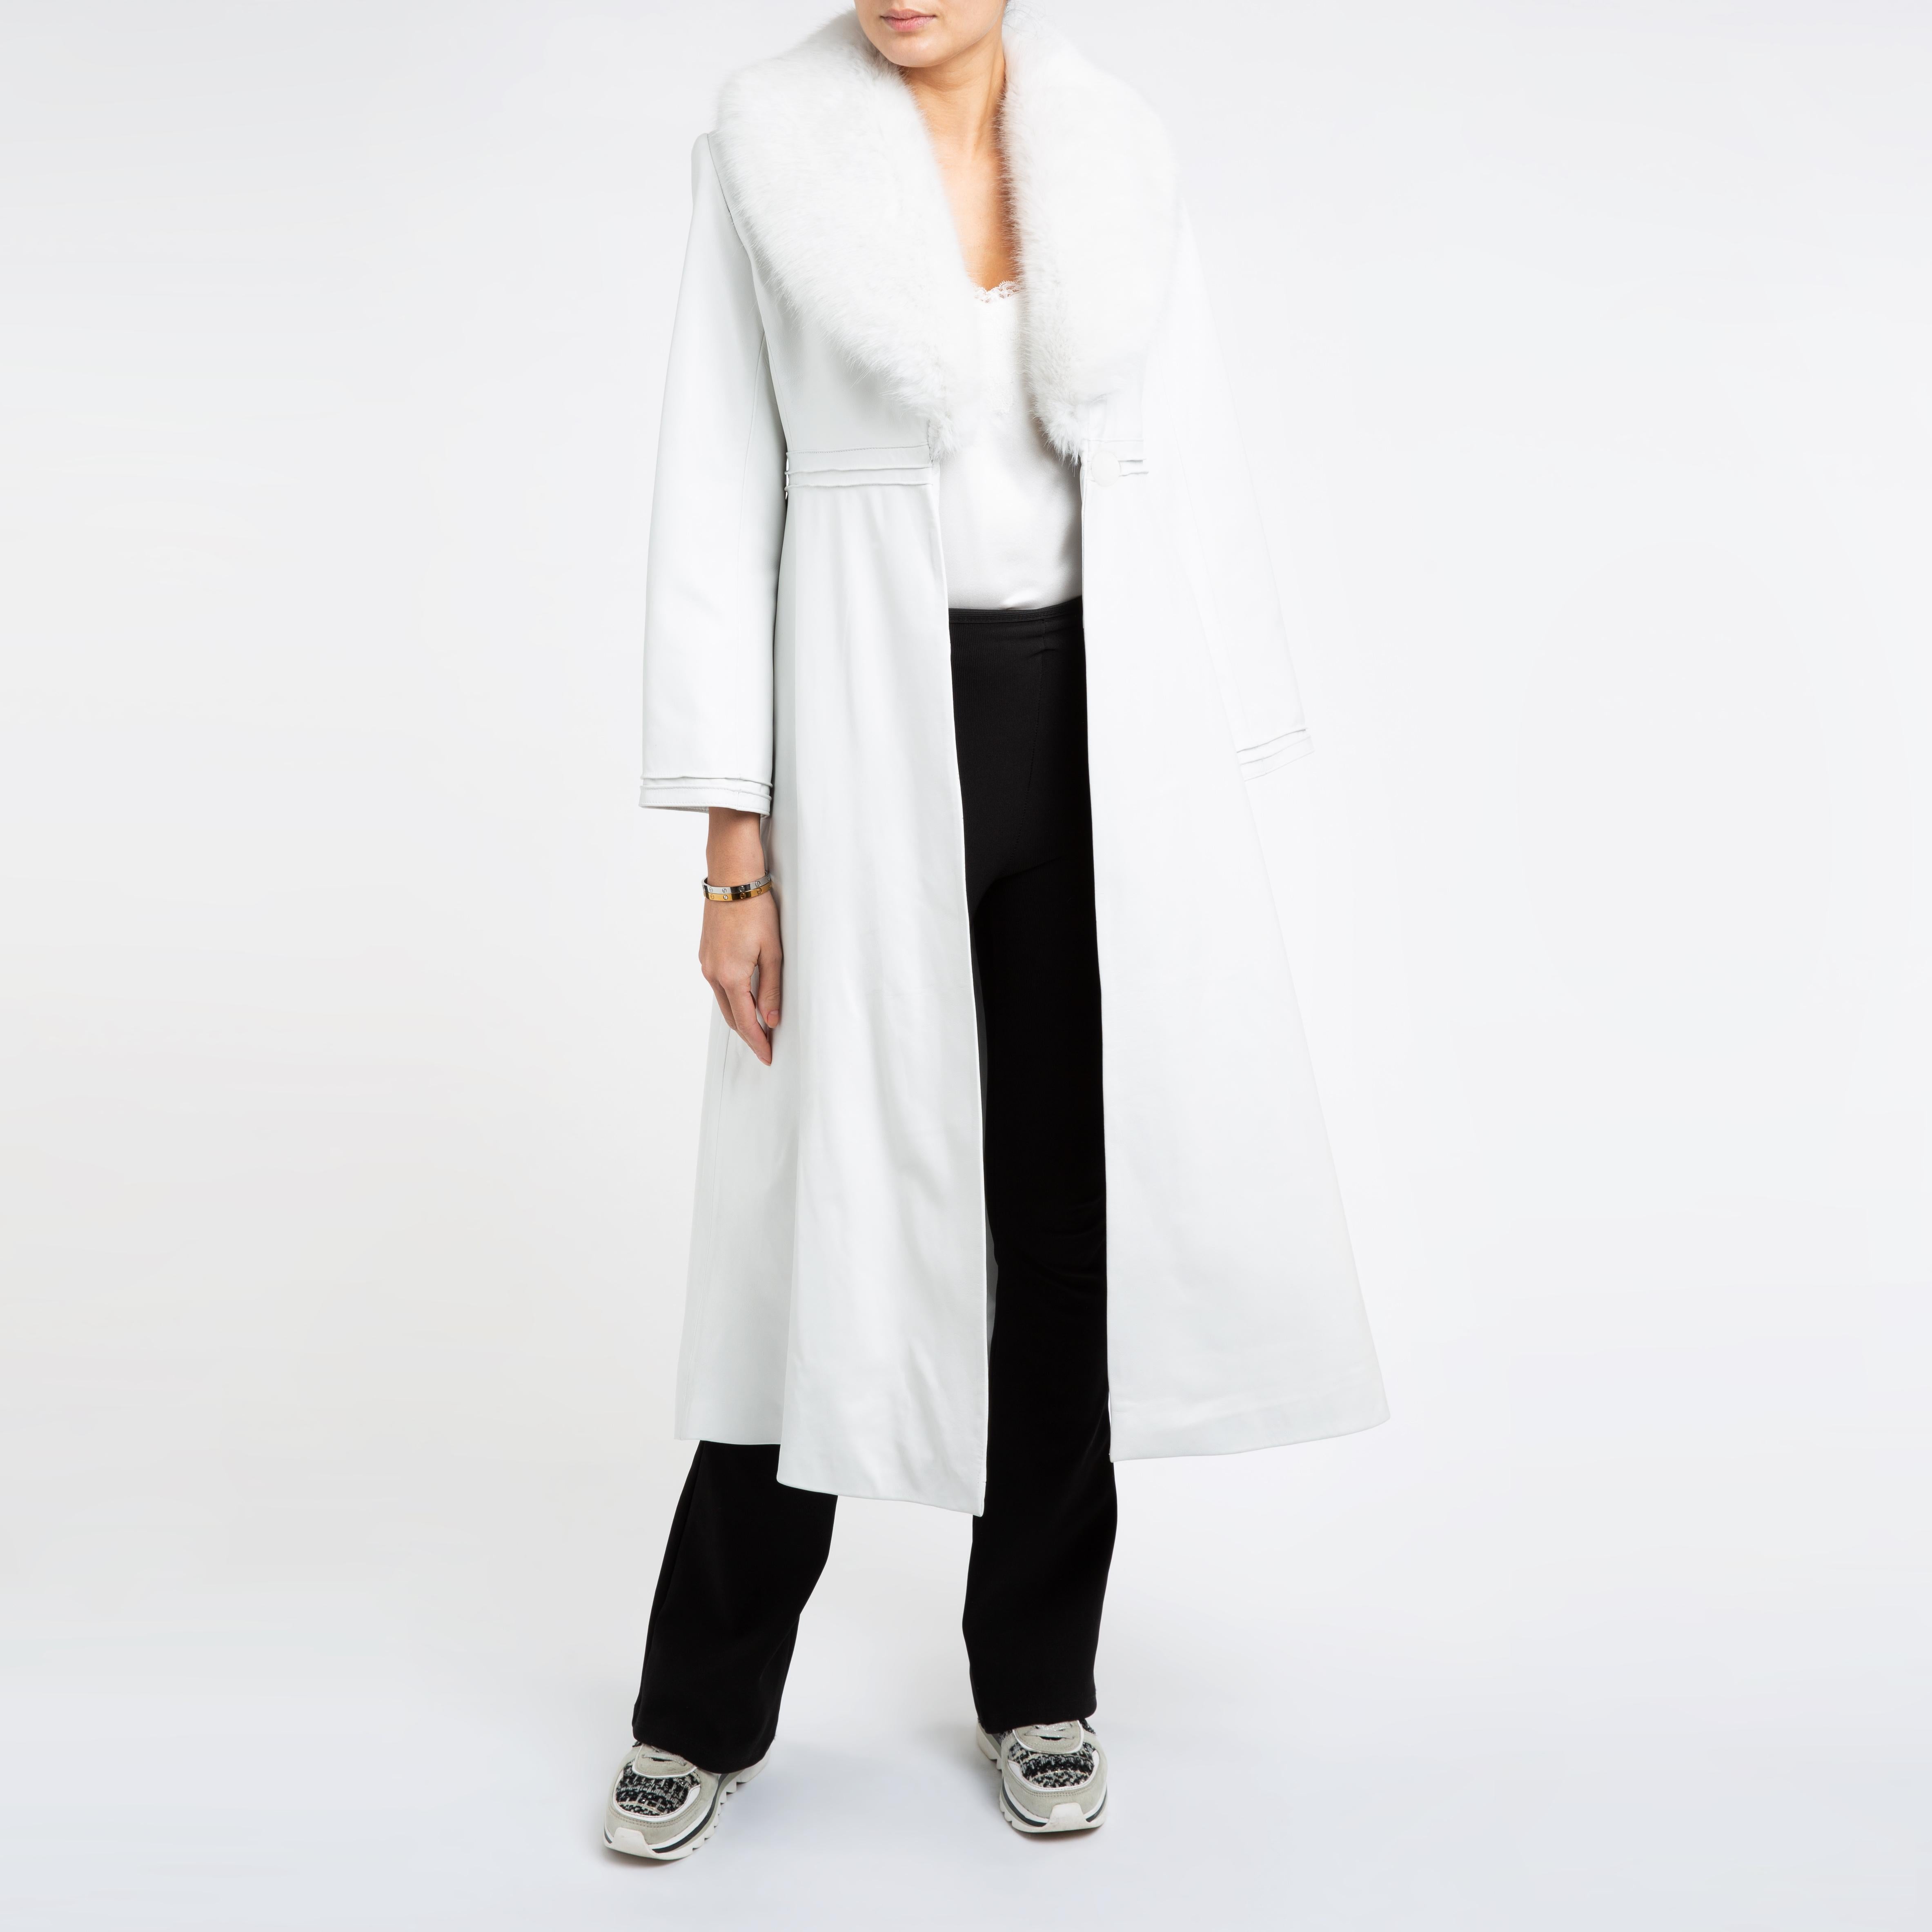 Gray Verheyen London Edward Leather Coat in White with Faux Fur - Size uk 8 